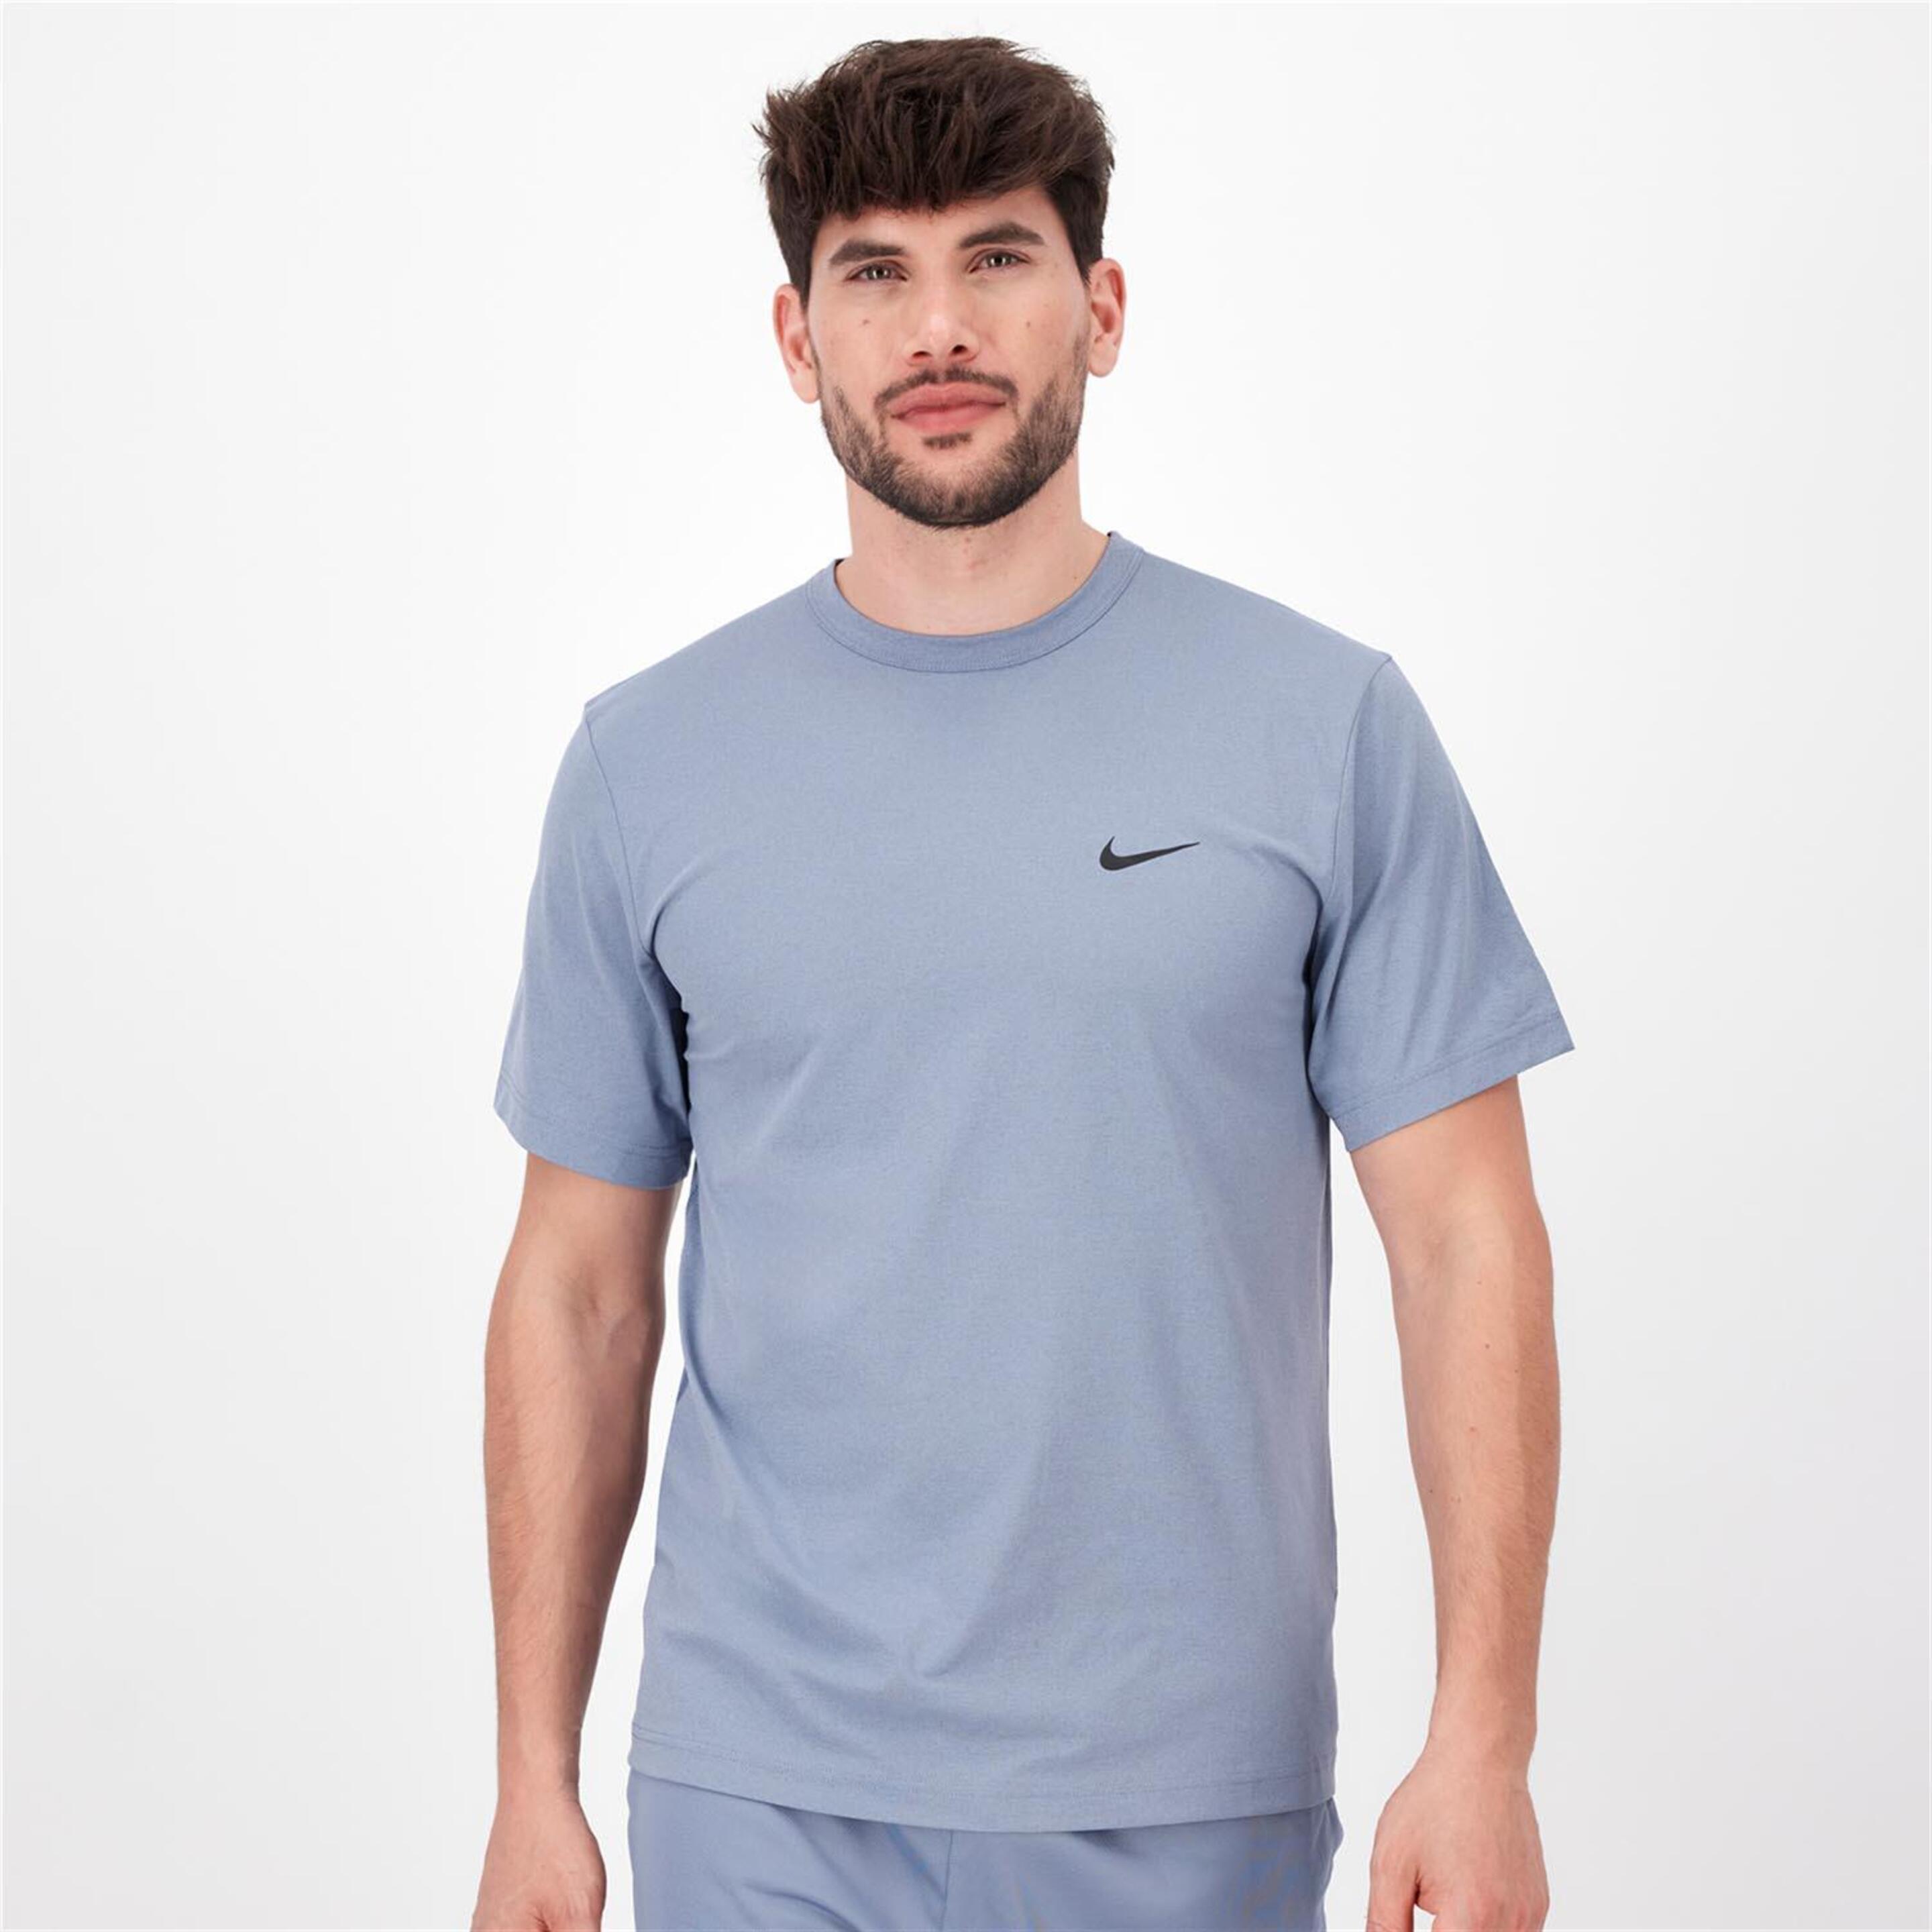 Nike Hyverse - gris - Camiseta Running Hombre